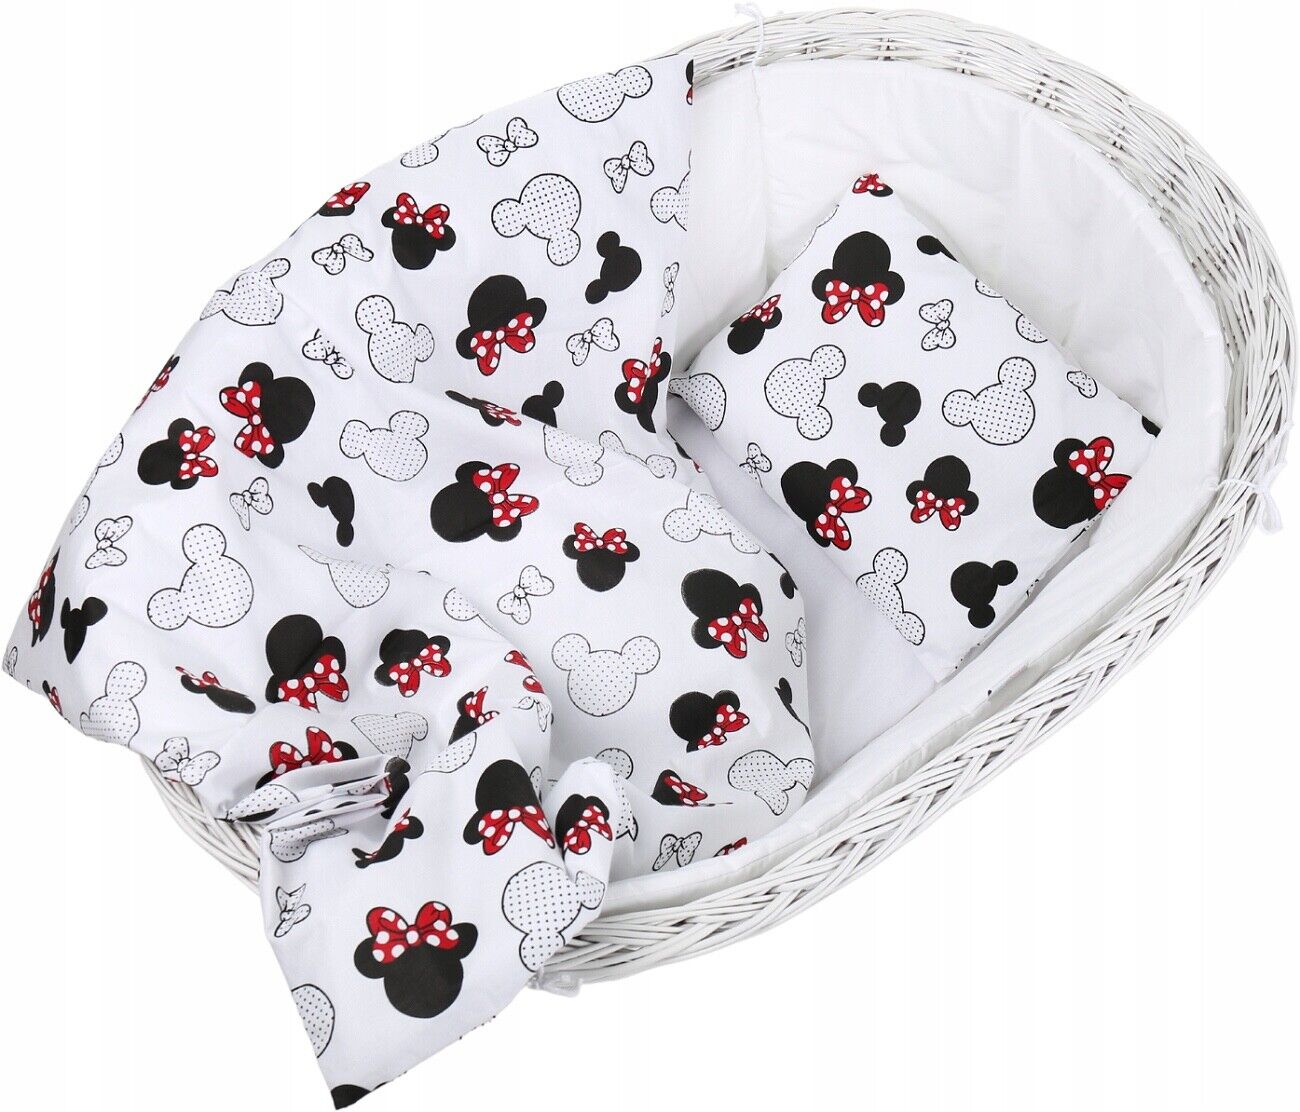 Baby bedding set 6pc 70x80 fit crib bumper pillow duvet sheet Minnie Mouse